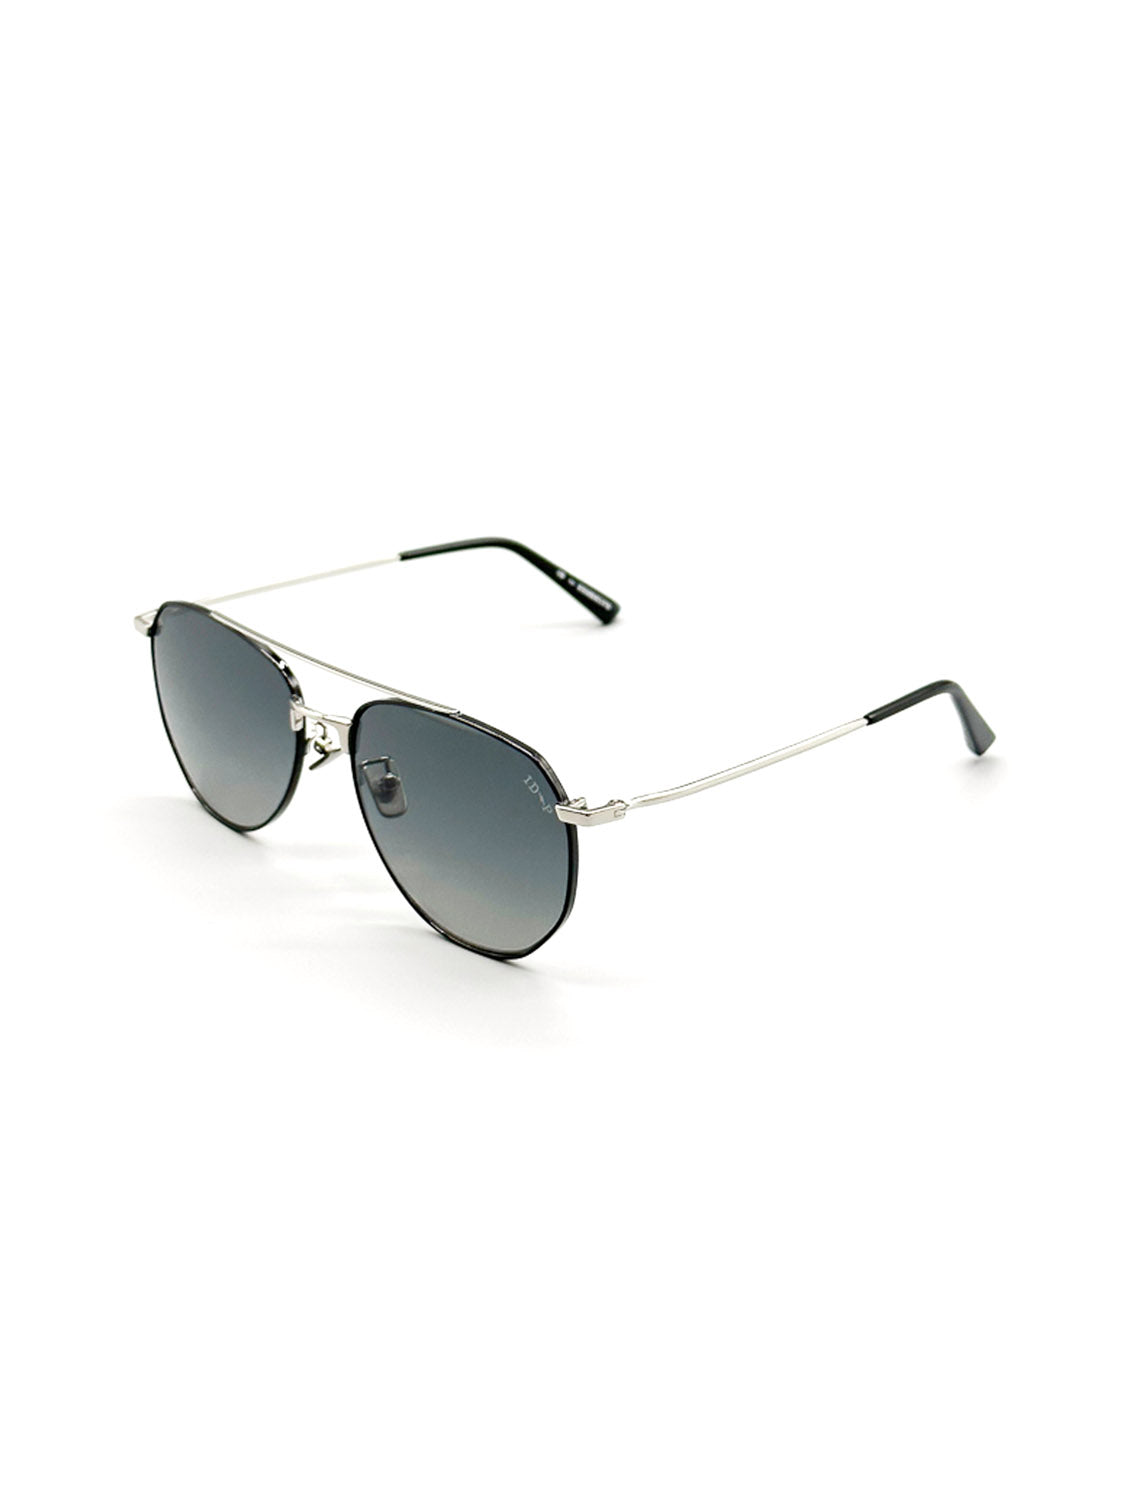 M417GG ID Polarized Sunglasses